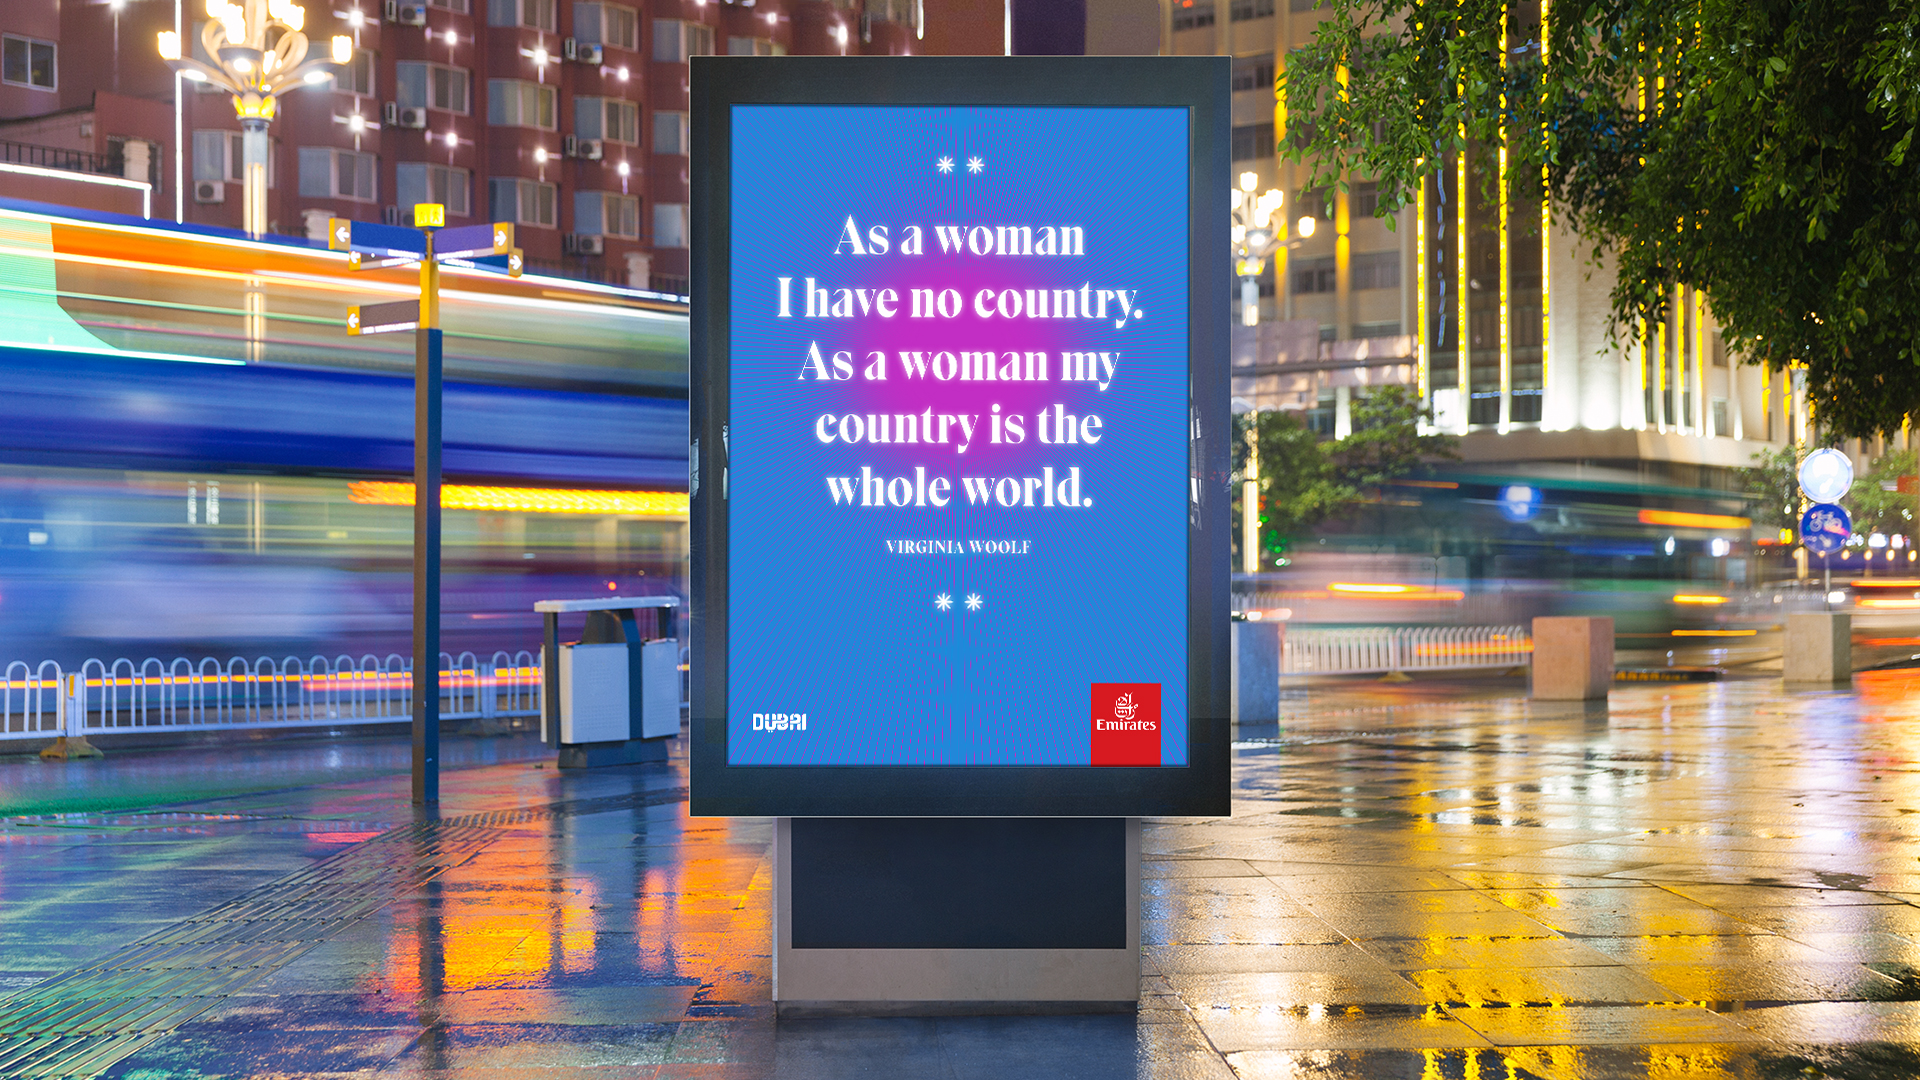 Emirates Dubai – Advertising on Street